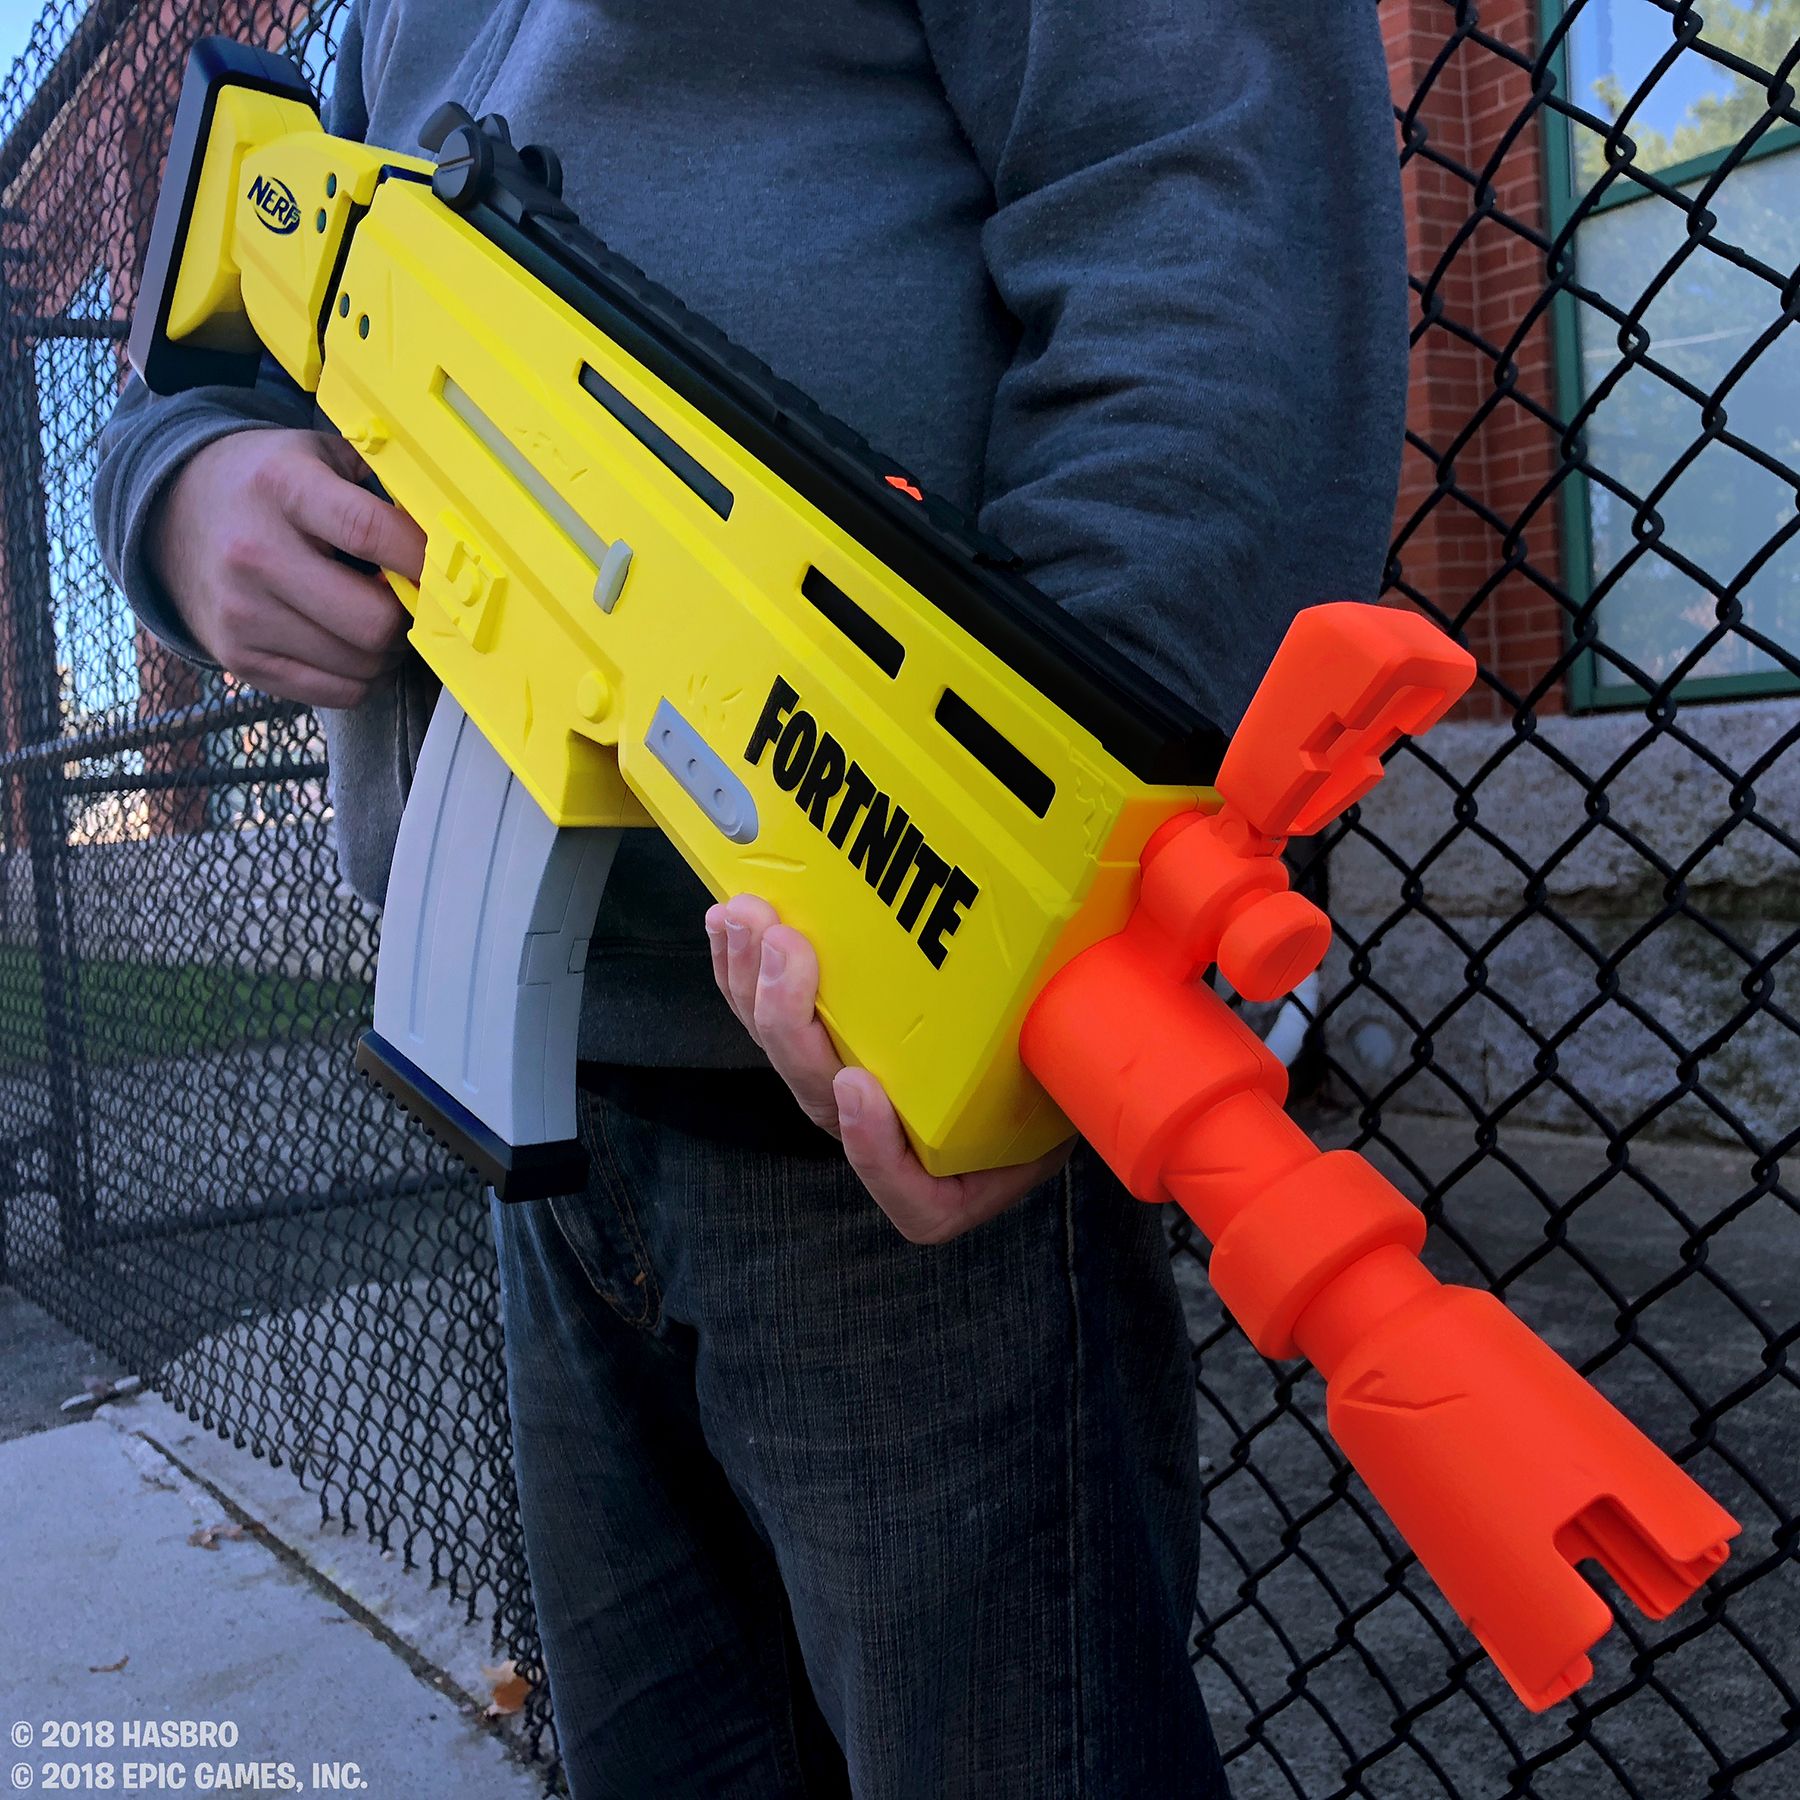 Pistola/Lançador Hasbro Fortnite AR-L Nerf Elite Dart Blaster